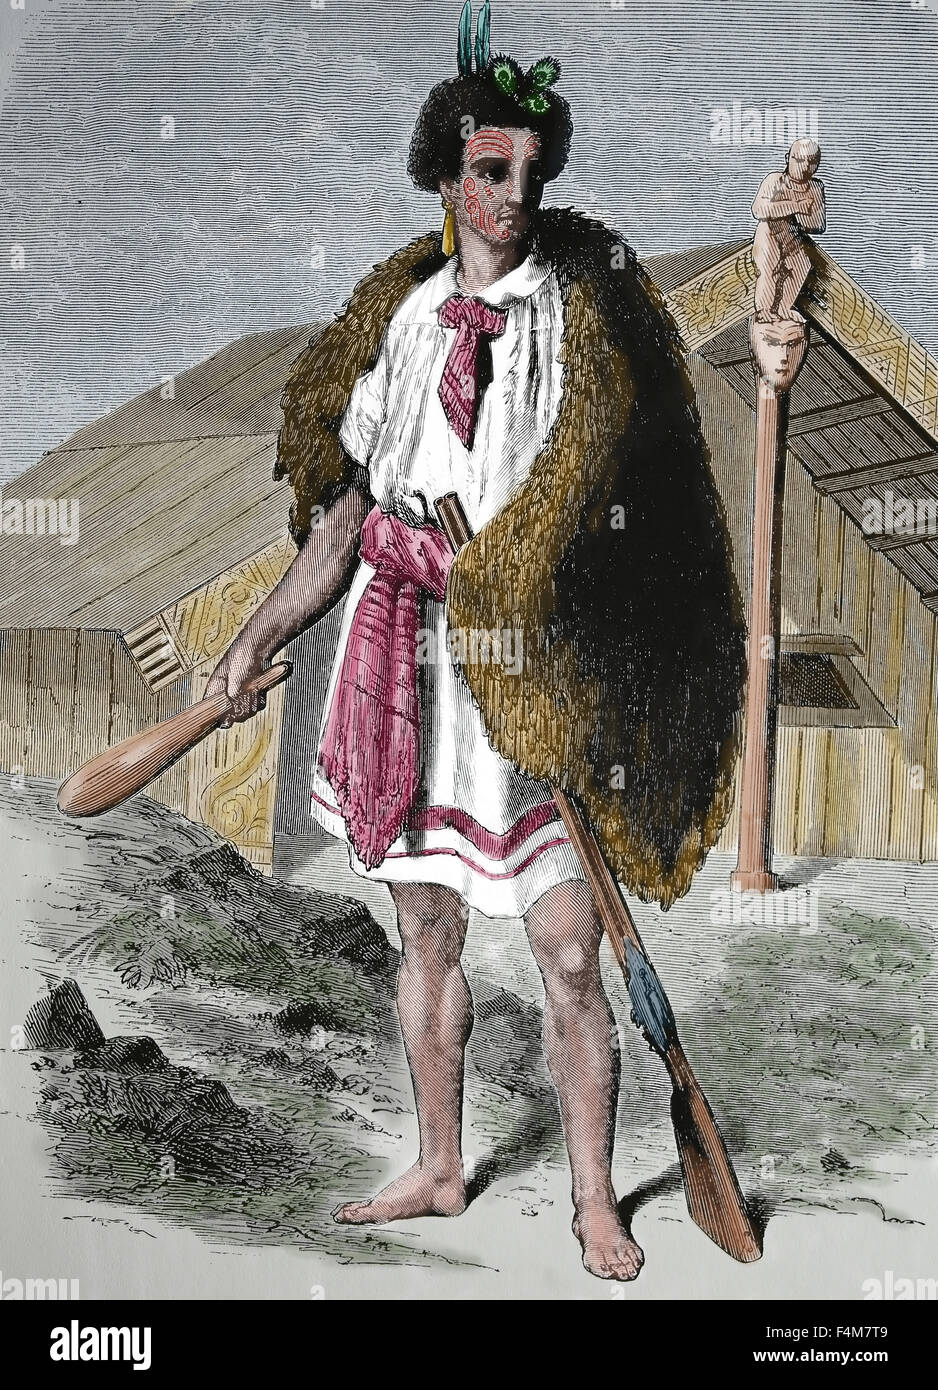 Pacific Islands. New Zeland. Maori chief, c. 1860. Engraving. Stock Photo